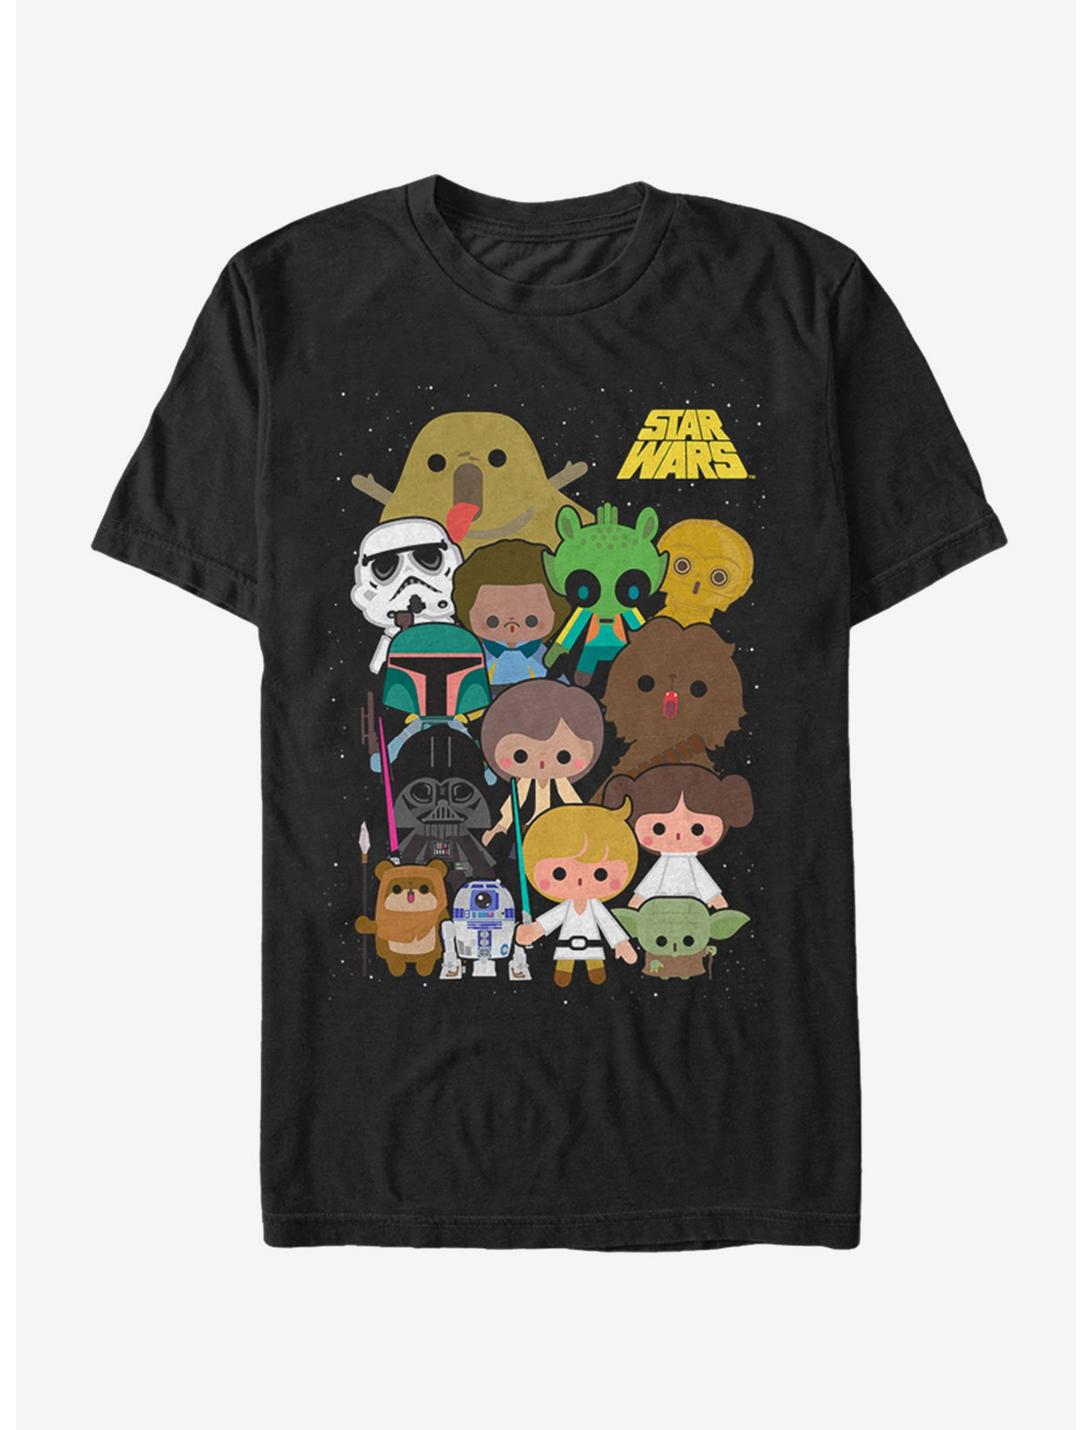 Star Wars Cute Cartoon Character Group T-Shirt, BLACK, hi-res